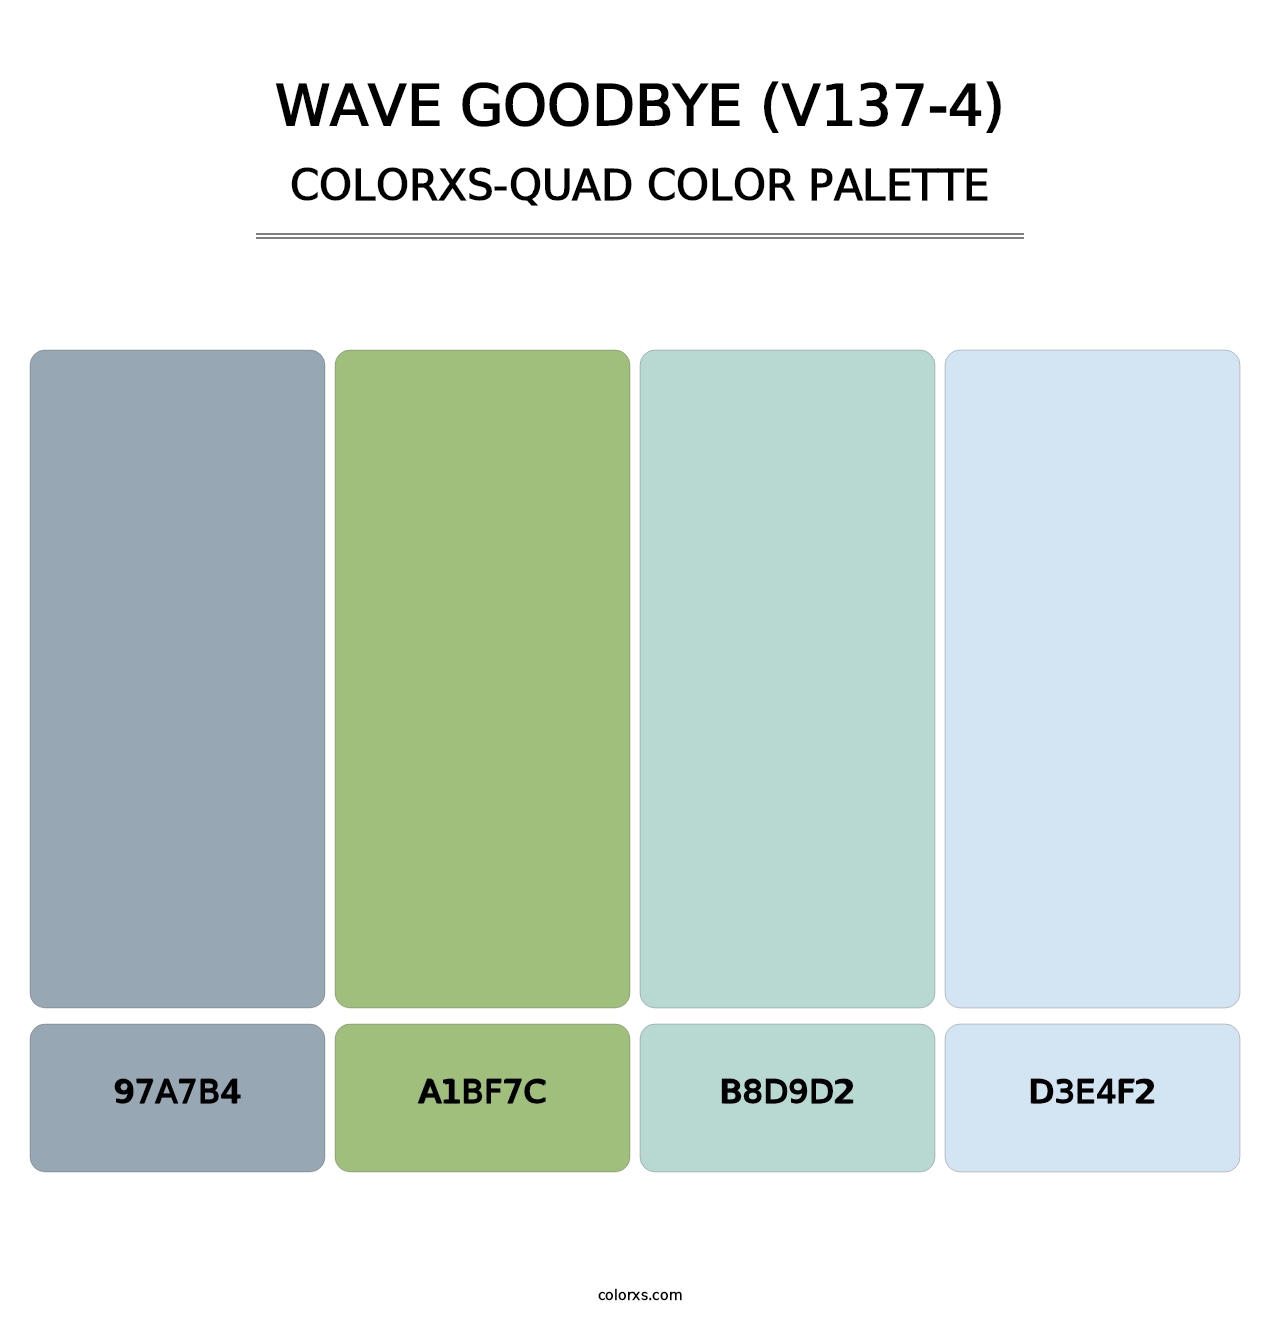 Wave Goodbye (V137-4) - Colorxs Quad Palette